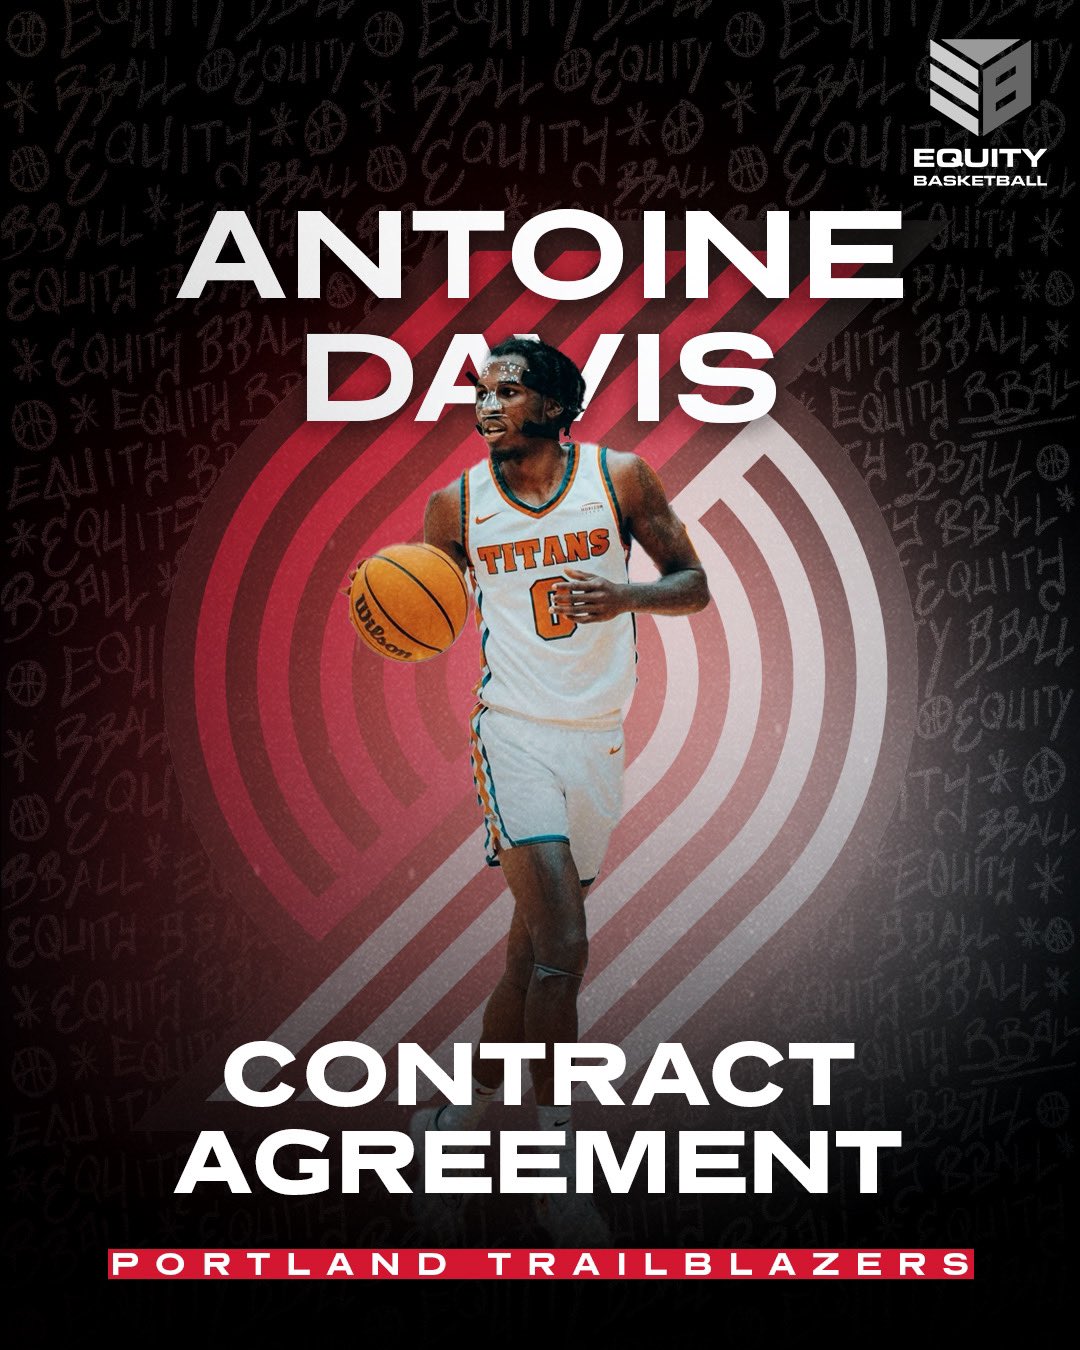 Detroit Mercy's Antoine Davis signing with Portland Trail Blazers